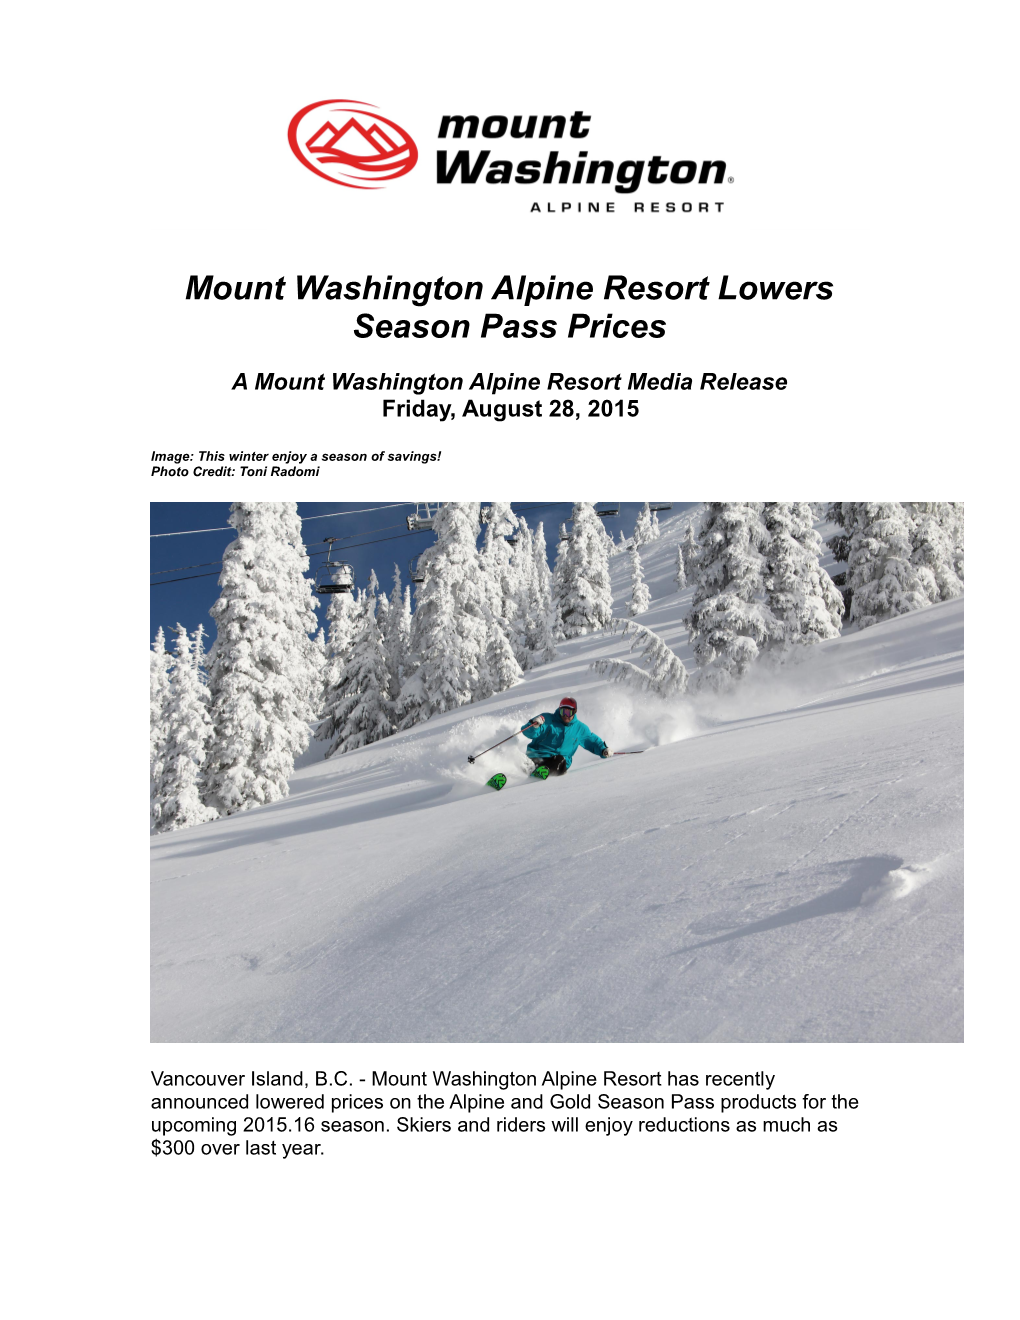 Mount Washington Alpine Resort Lowers Season Pass Prices